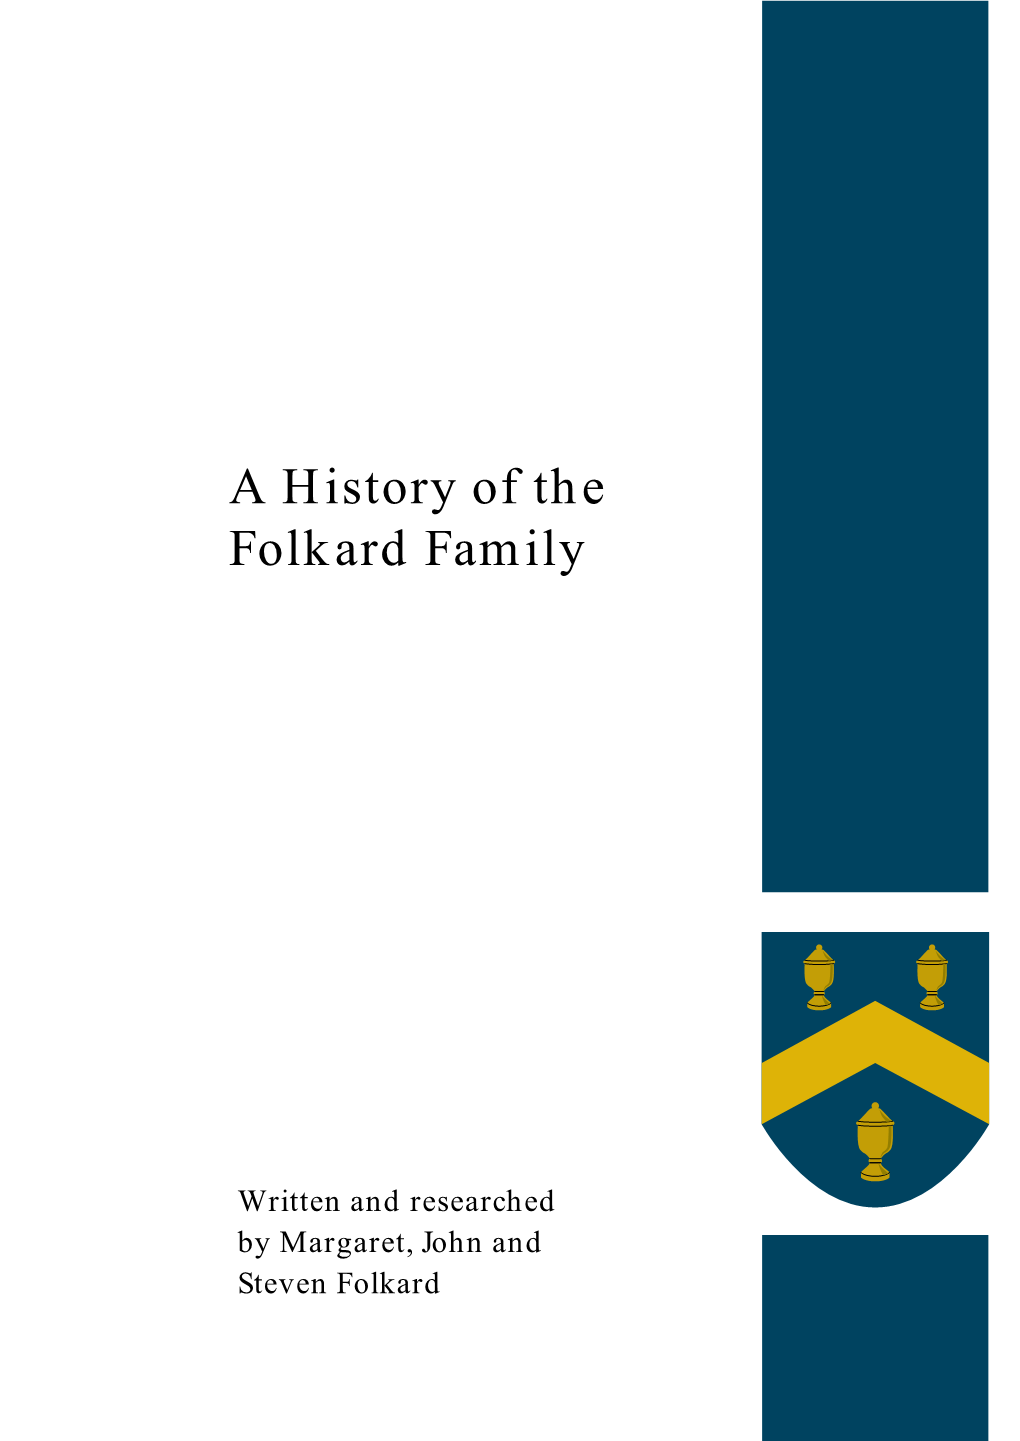 A History of the Folkard Family